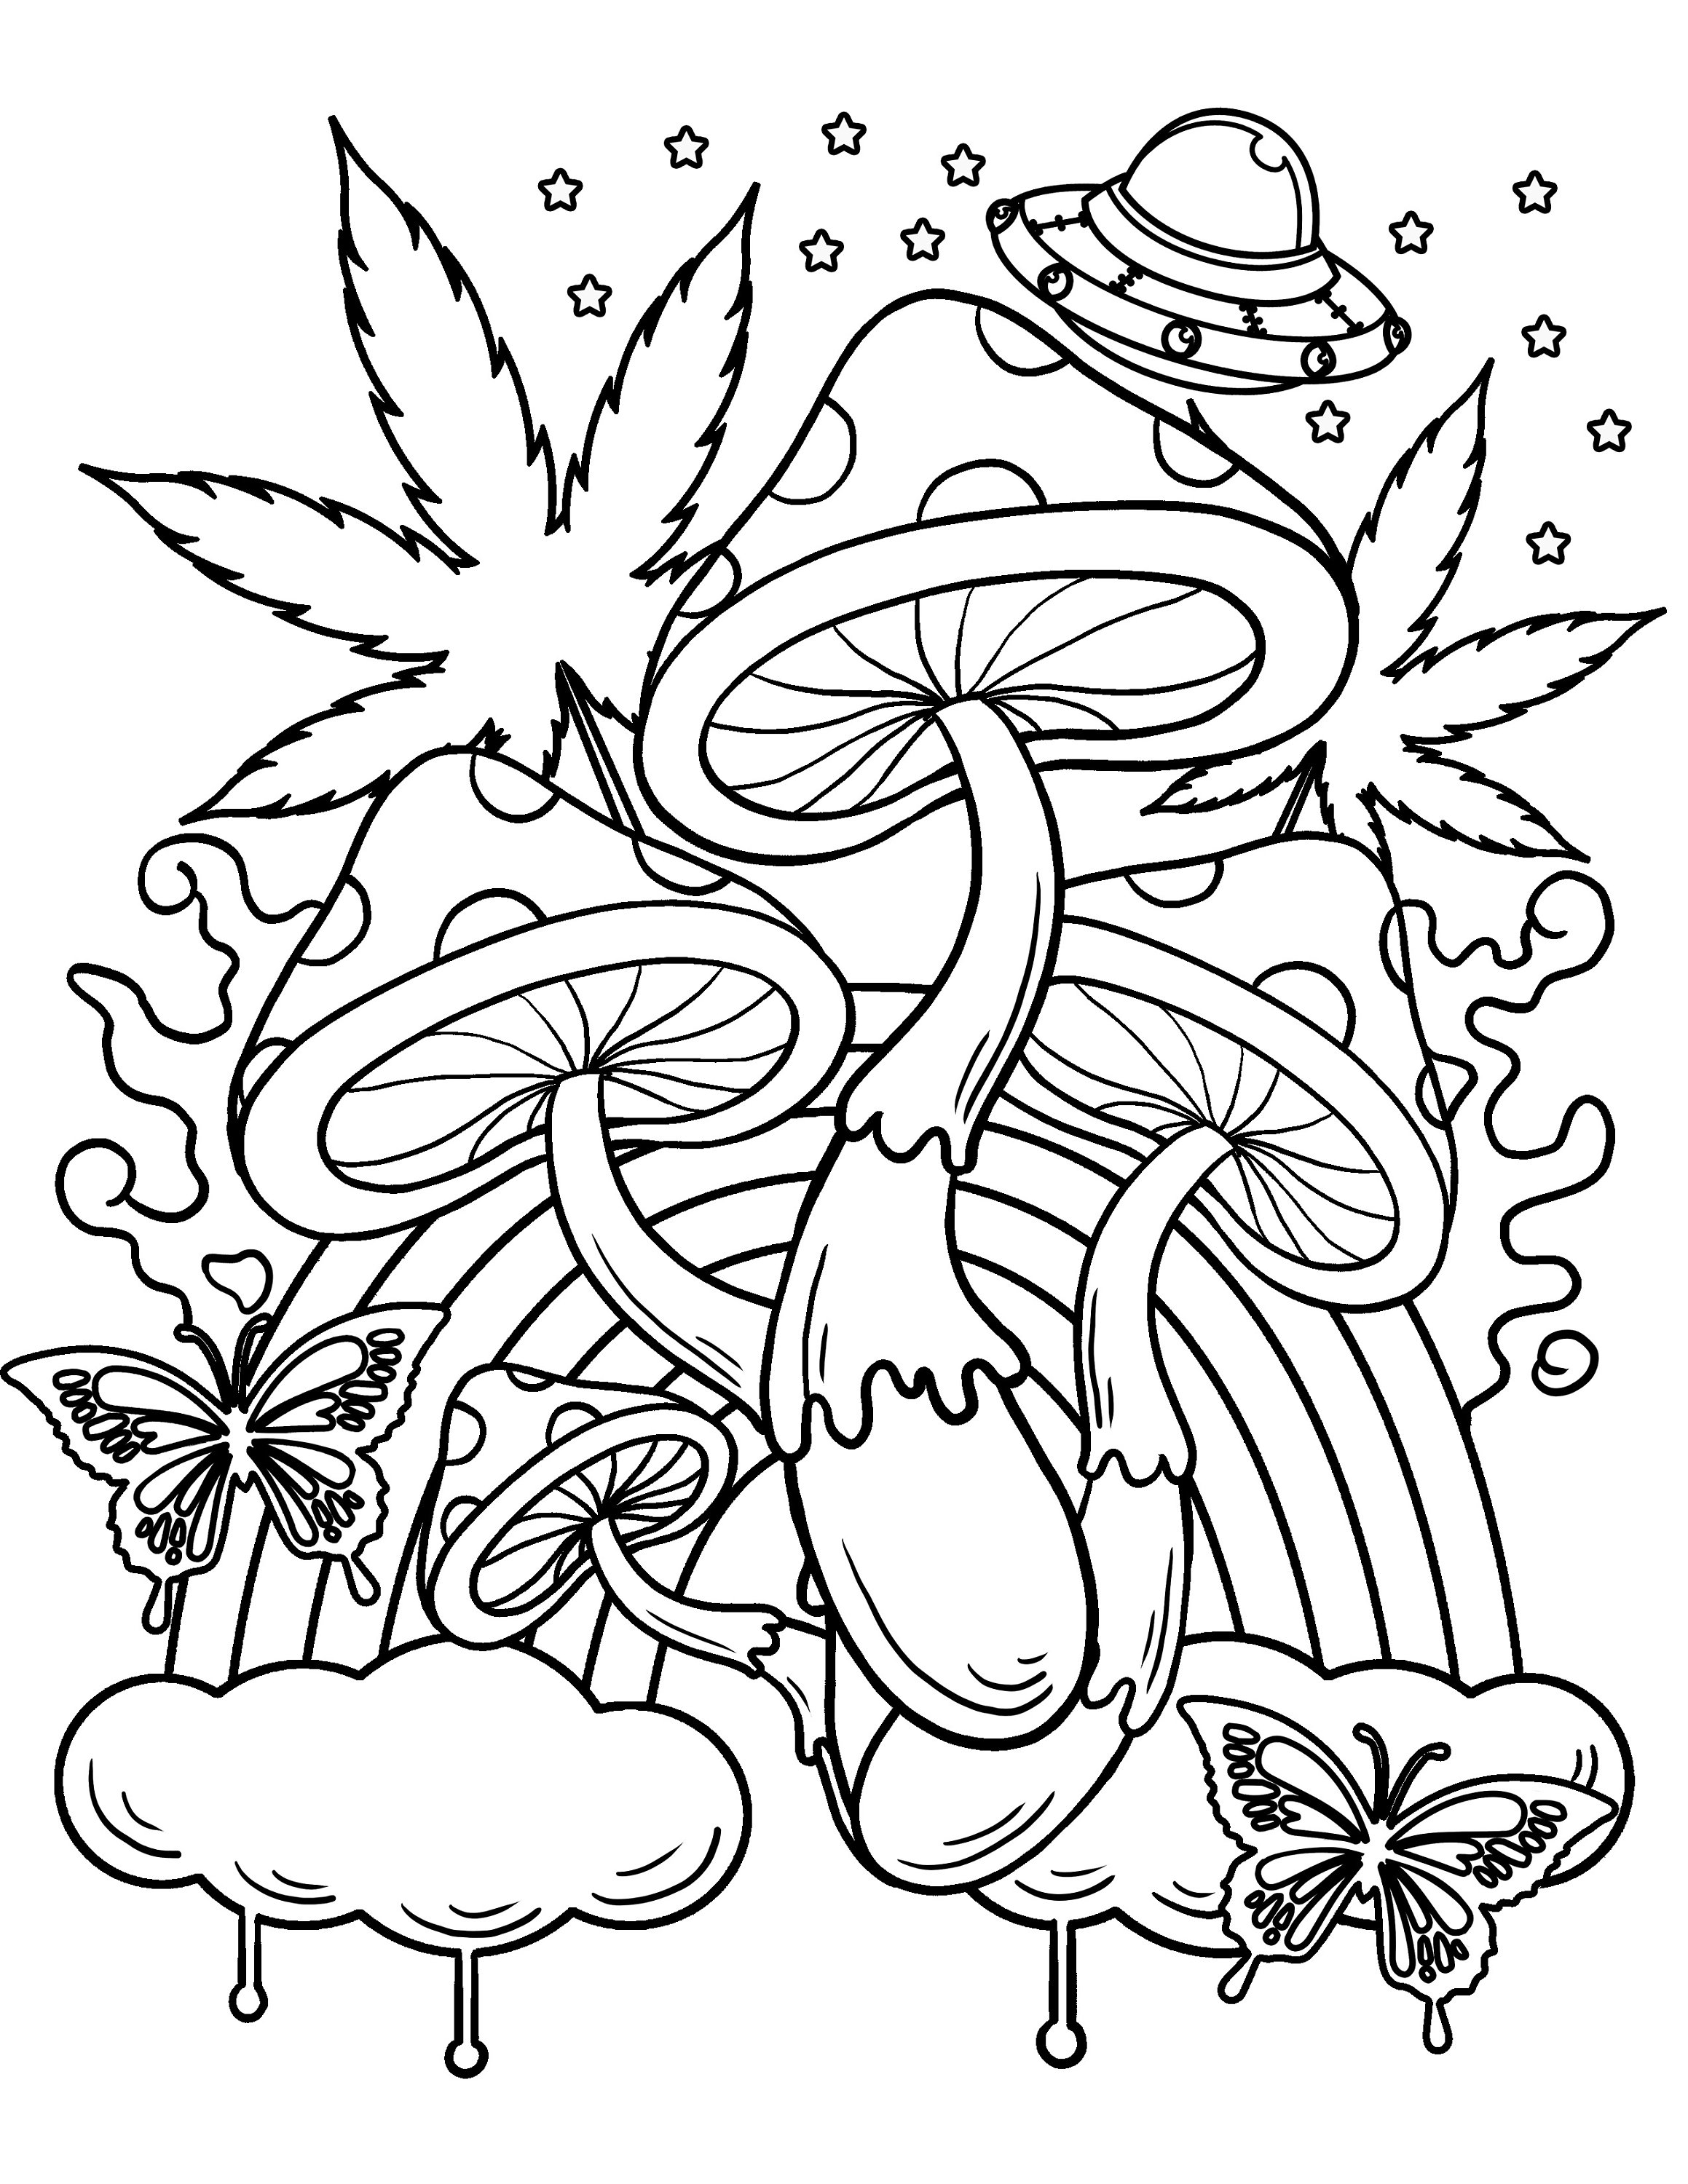 Trippy coloring pages magic mushroom printable pdf digital download stoner coloring book